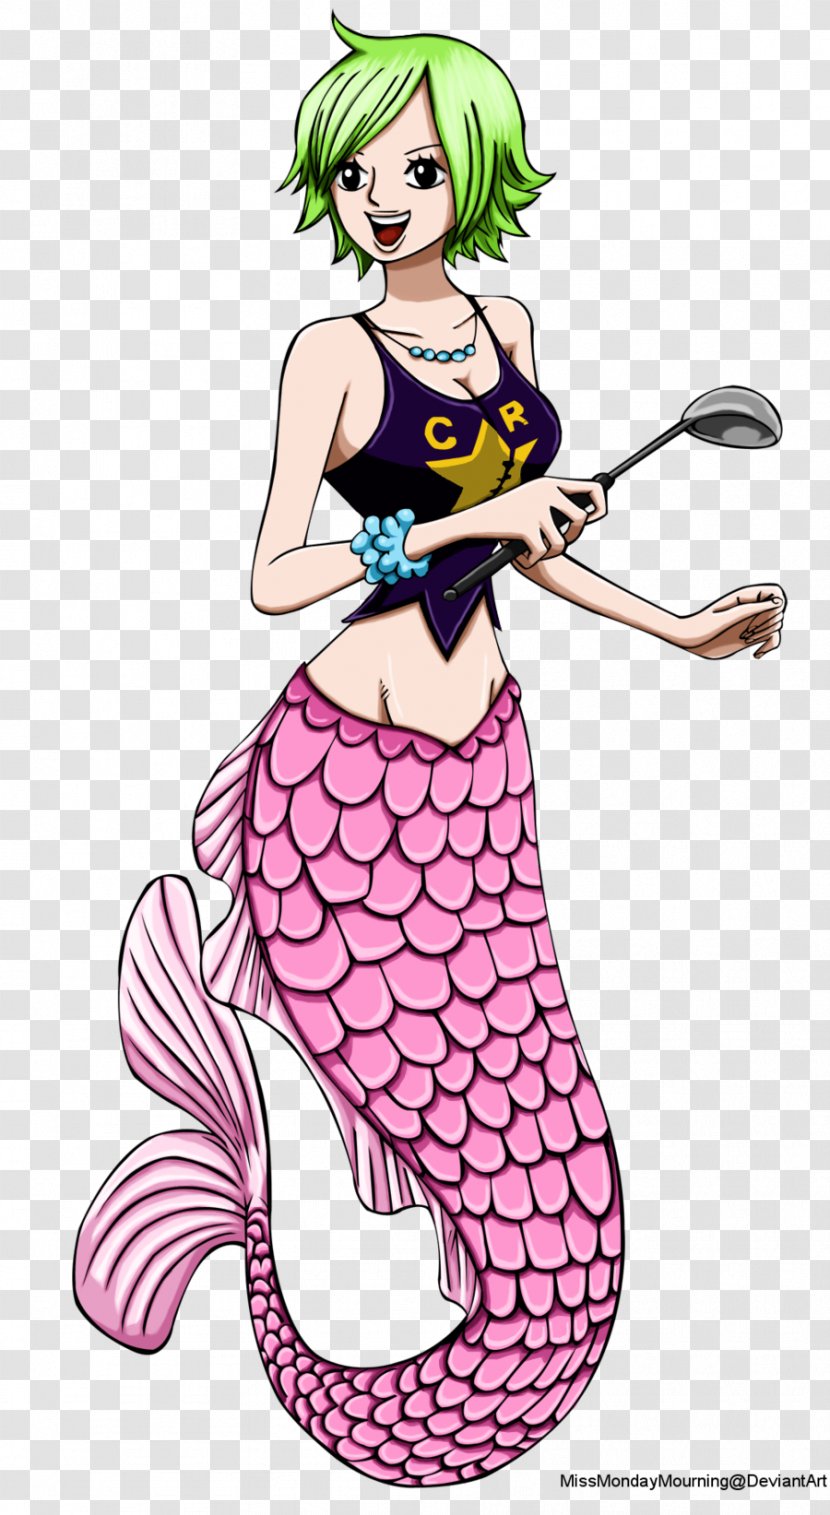 Roronoa Zoro Monkey D. Luffy Nami Vinsmoke Sanji One Piece, Volume 2: Buggy The Clown - Cartoon - Mermaid Tail Transparent PNG